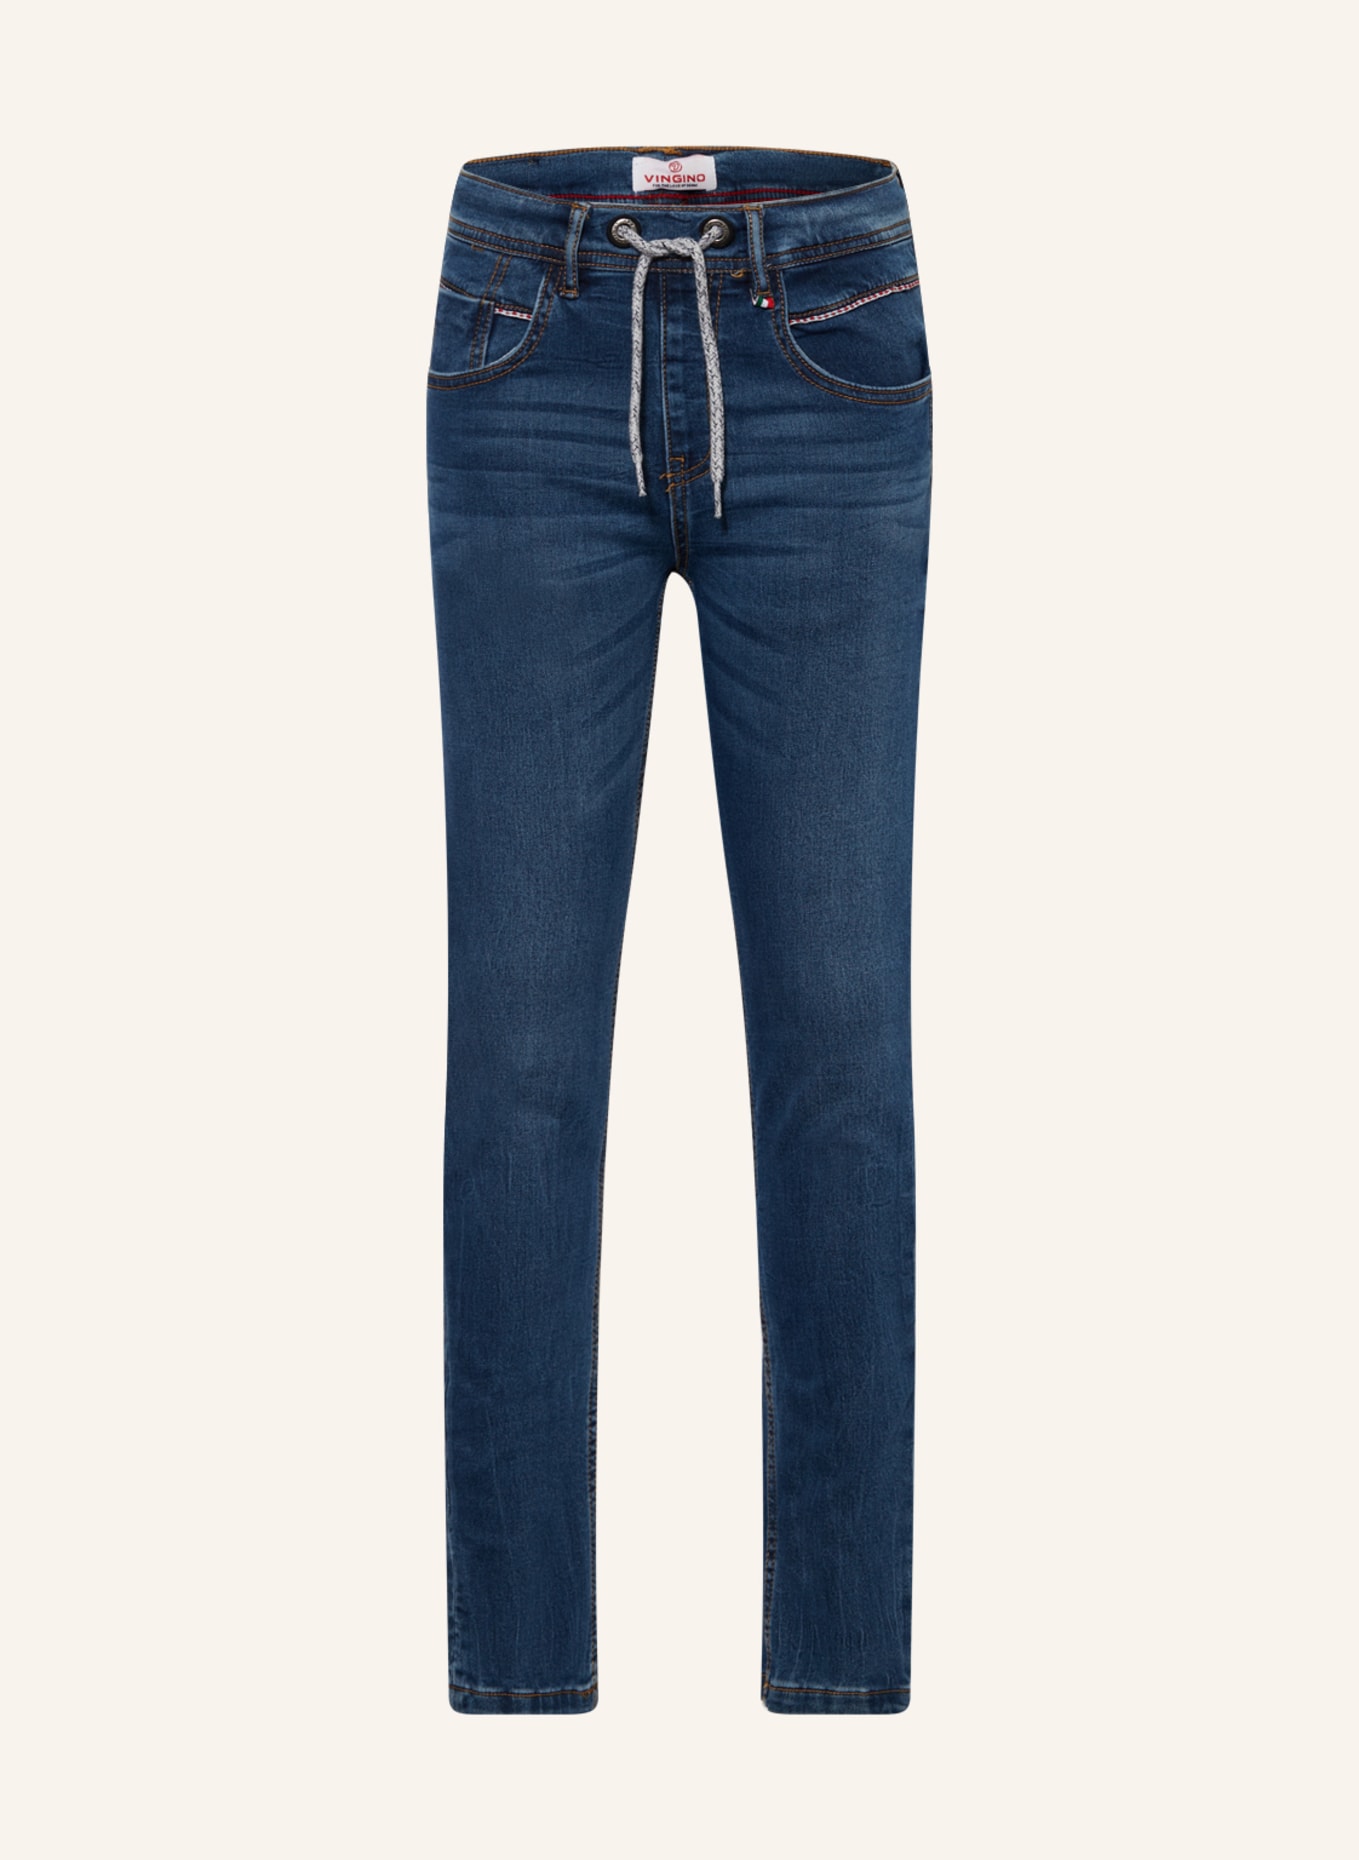 VINGINO Jeans DAVINO Slim Fit, Farbe: CRUZIALE BLUE (Bild 1)